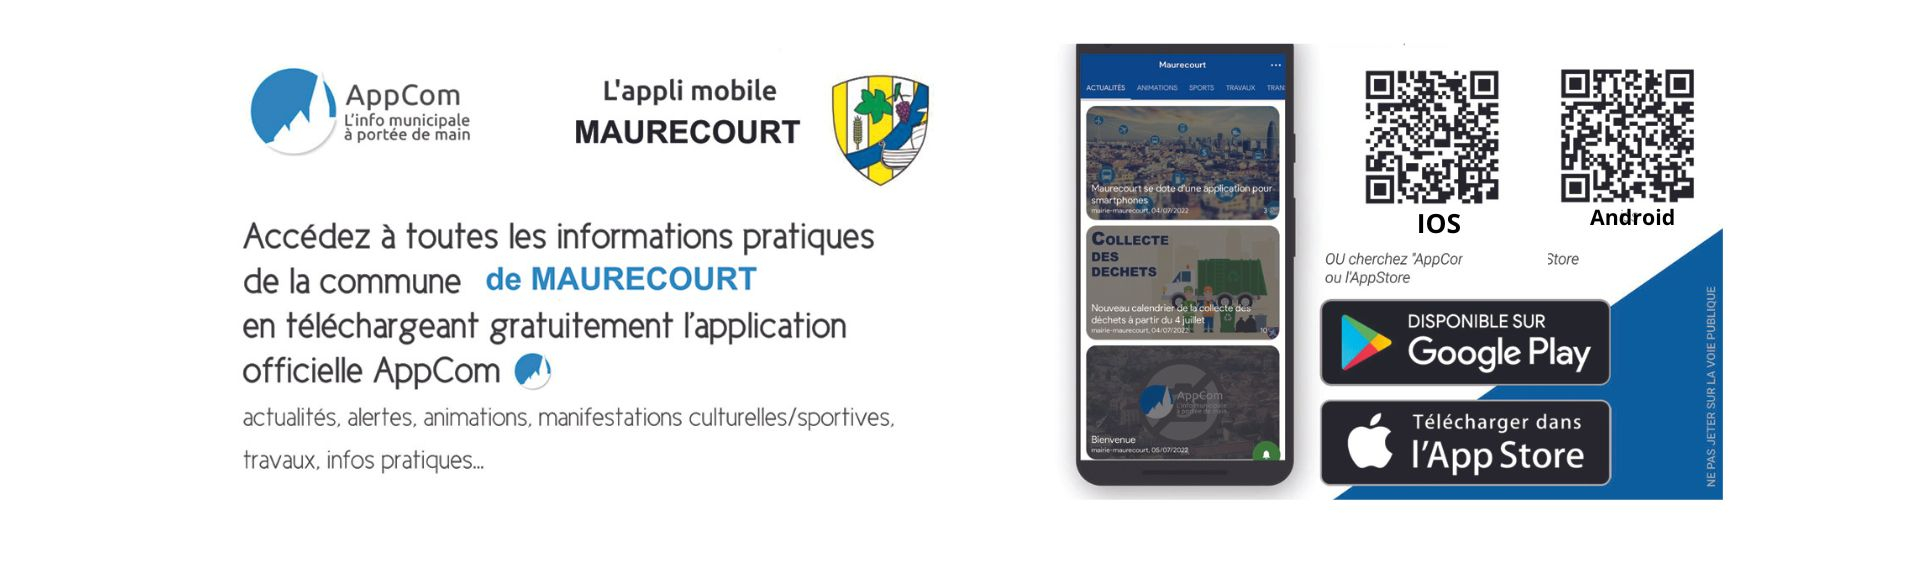 Application Maurecourt